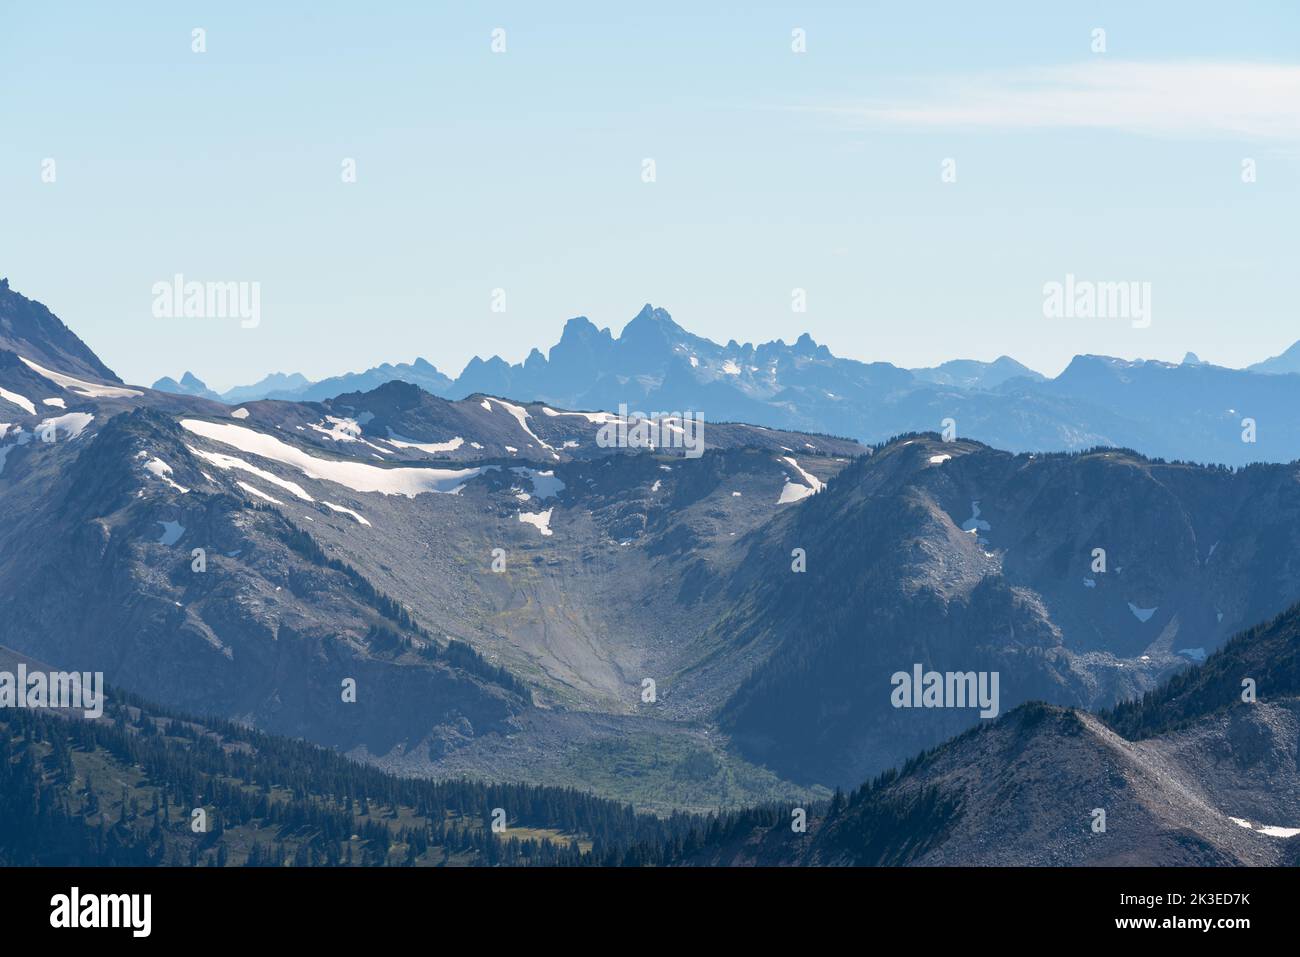 Rugged peaks and alpine valleys define British Columbia's wilderness. Stock Photo